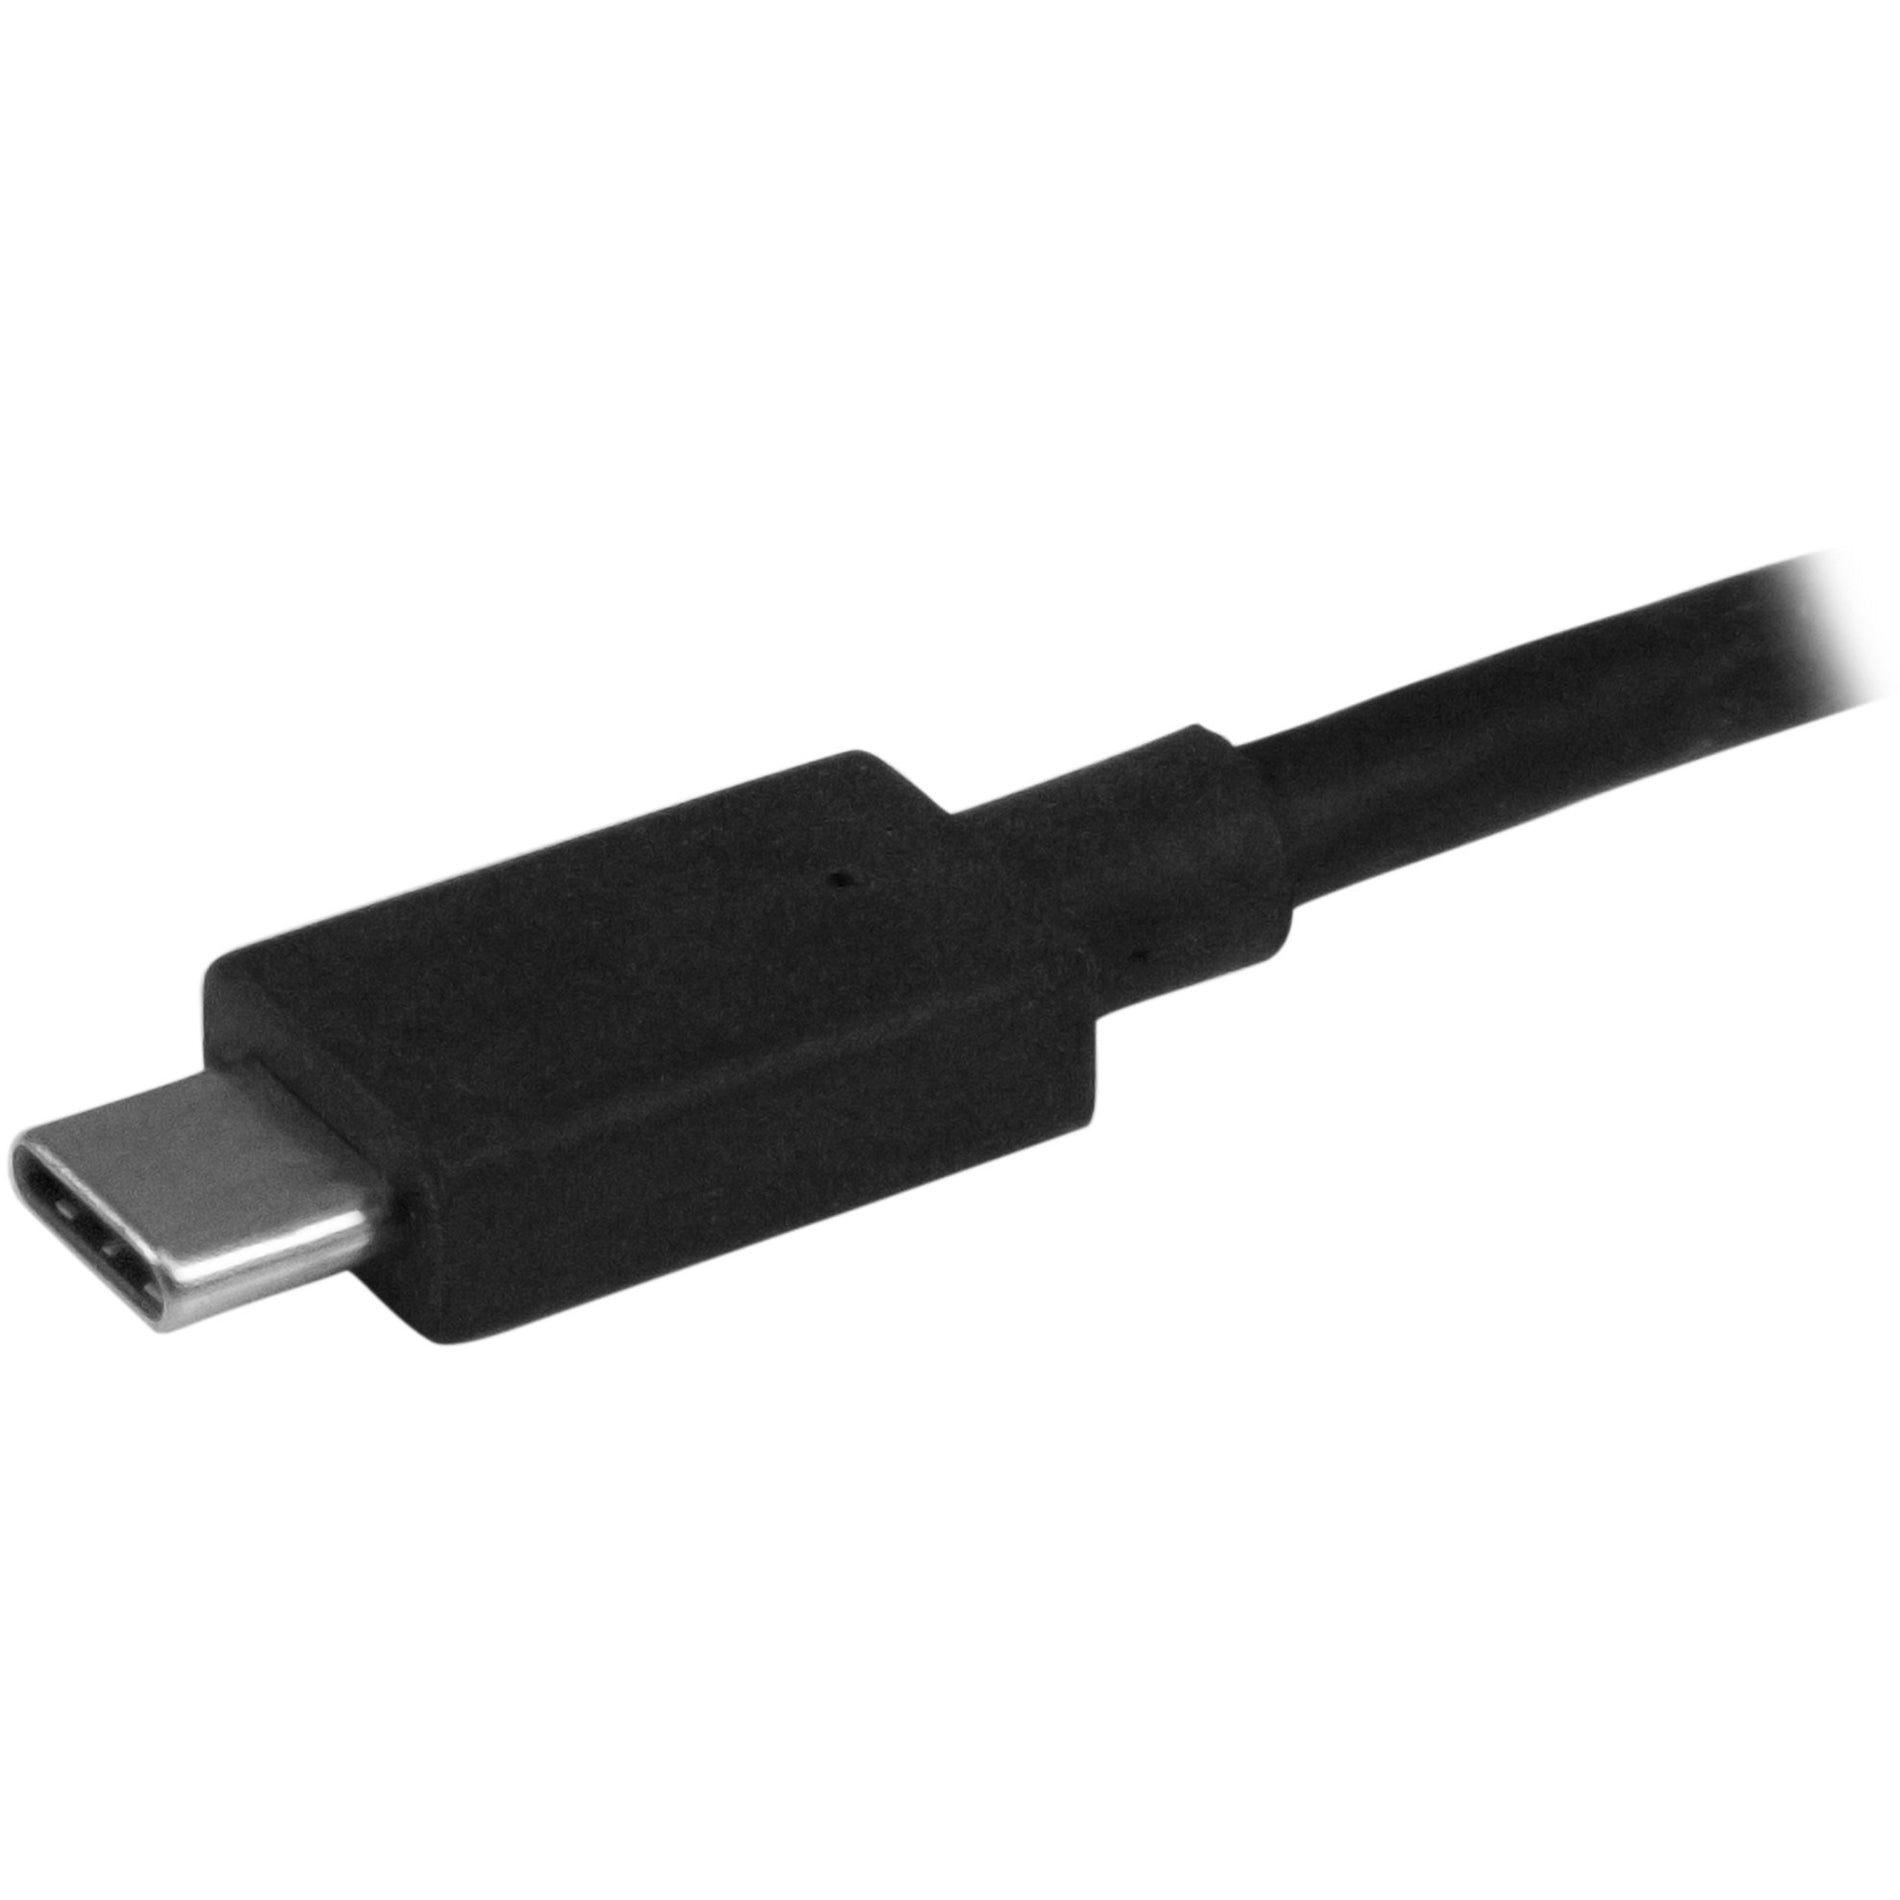 StarTech.com MSTCDP122HD USB-C to HDMI Multi-Monitor Splitter - Thunderbolt 3 Compatible - 2-Port MST Hub, 4K Video Resolution, 3-Year Warranty